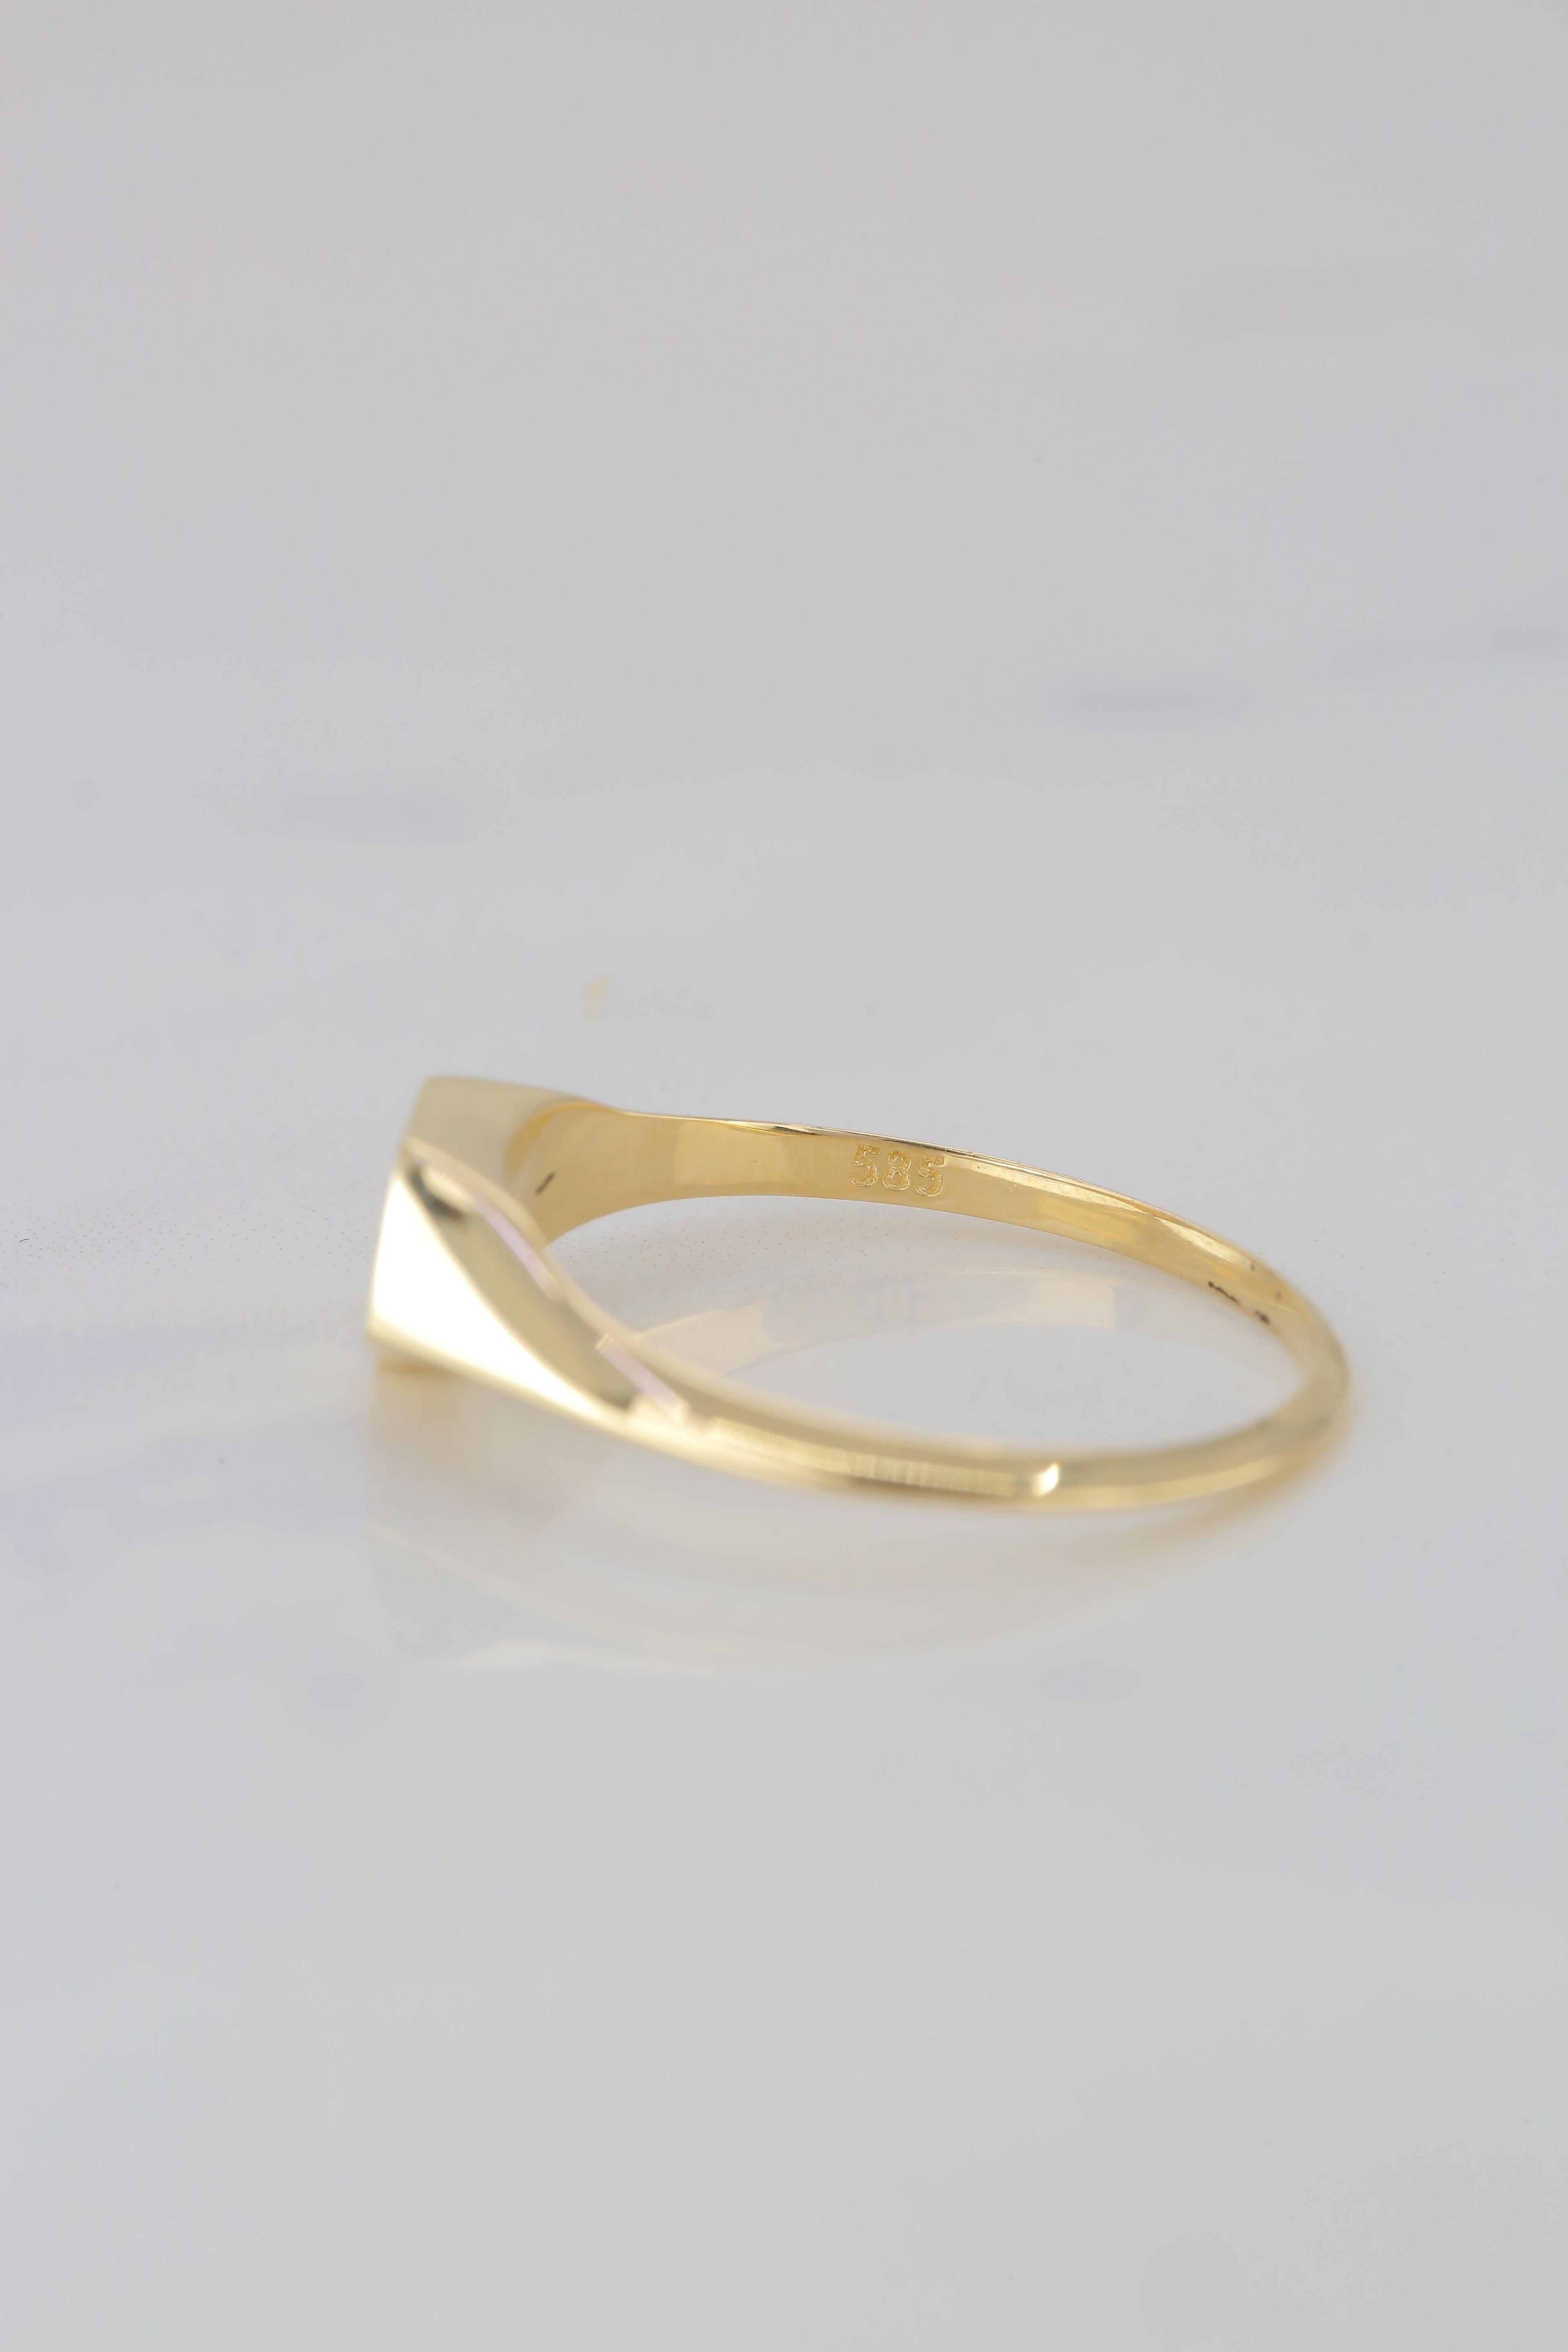 Im Angebot: Rosay Siegelring, 14K Gold Rosay Pentagon Siegelring, kleiner Pentagonal Ring () 7